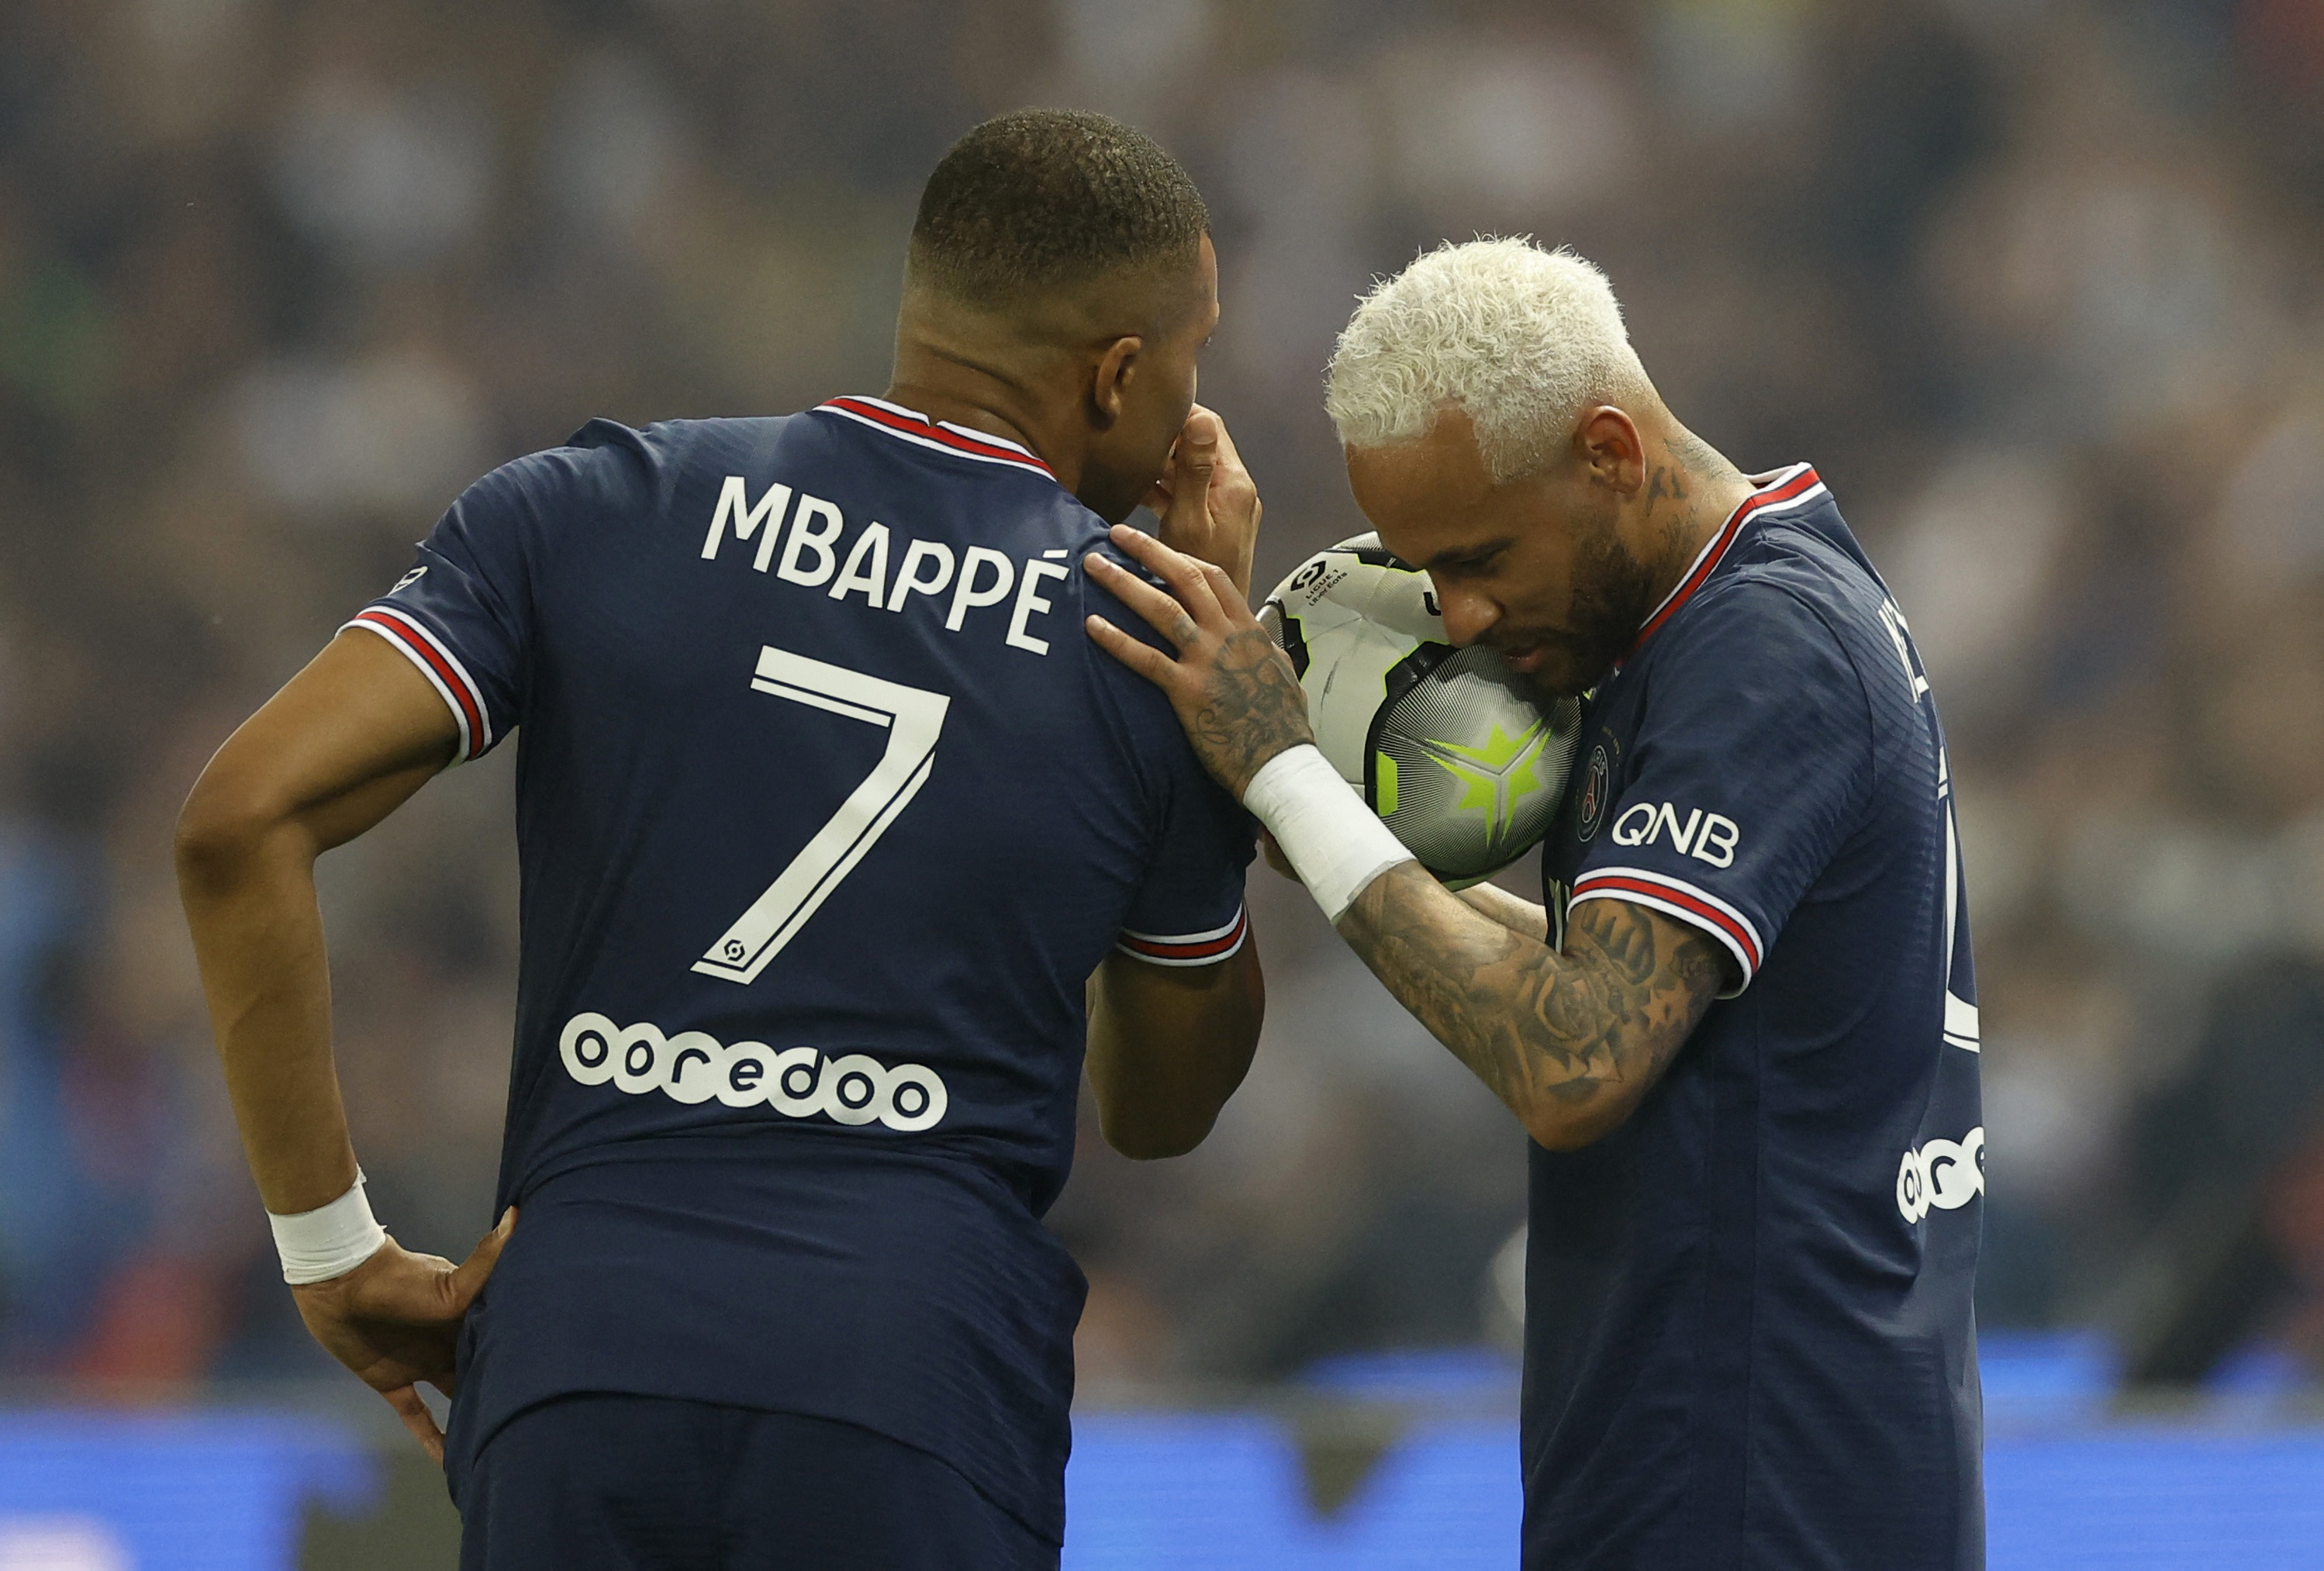 El "penaltygate" entre Neymar y Mbappé destapó otros conflictos en PSG (Foto: Reuters)